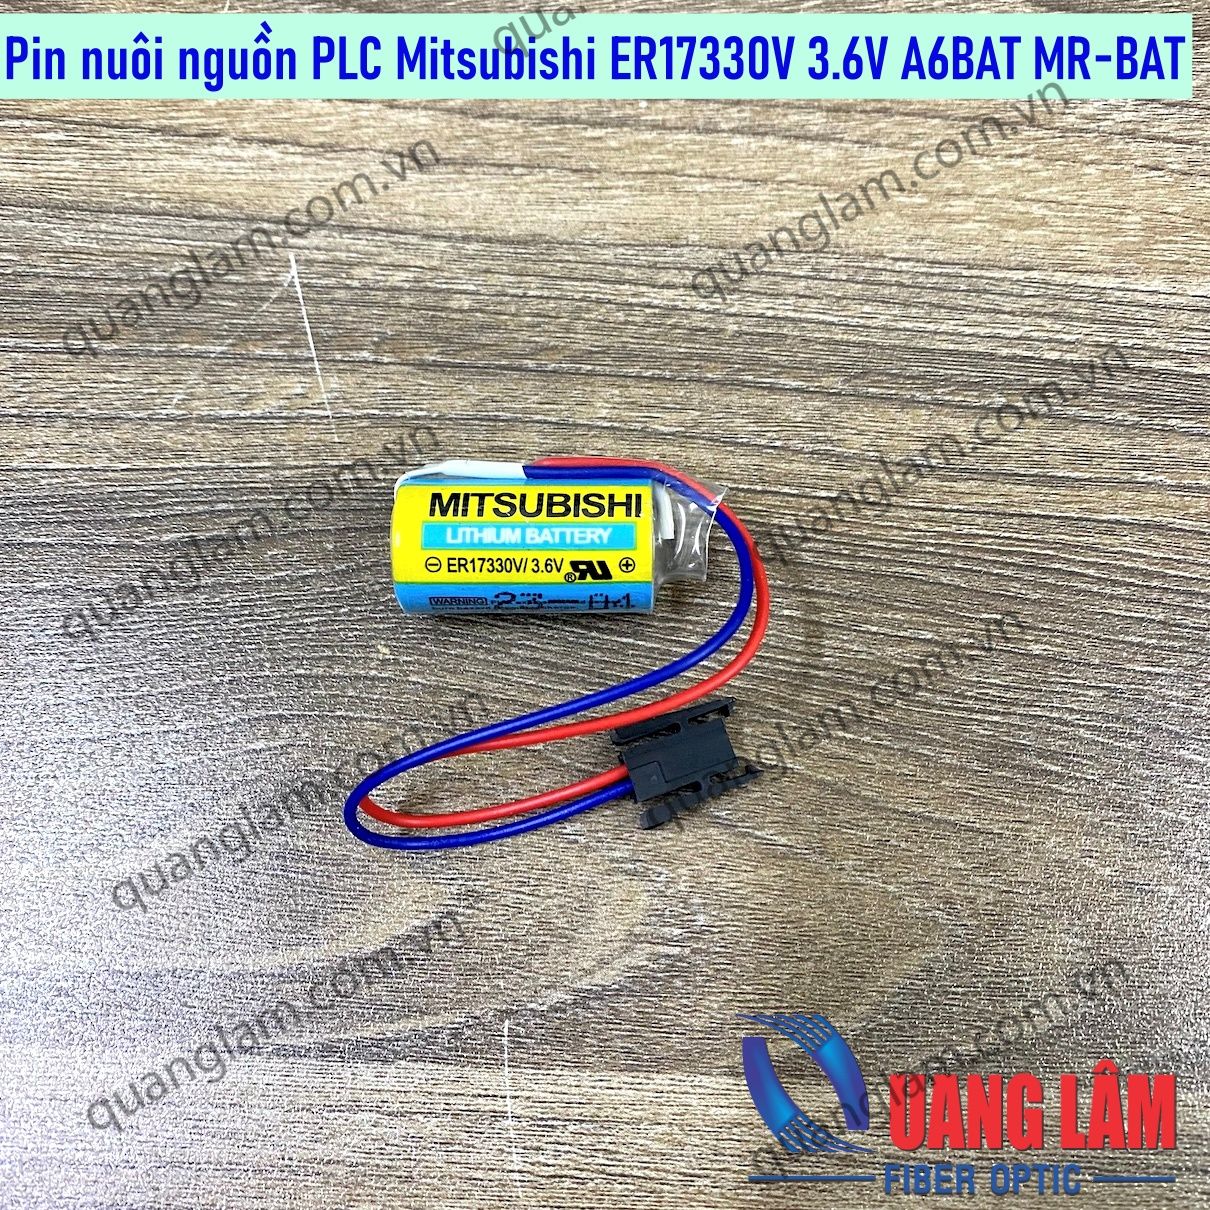 Pin nuôi nguồn PLC Mitsubishi ER17330V A6BAT MR-BAT ER17330 3.6V